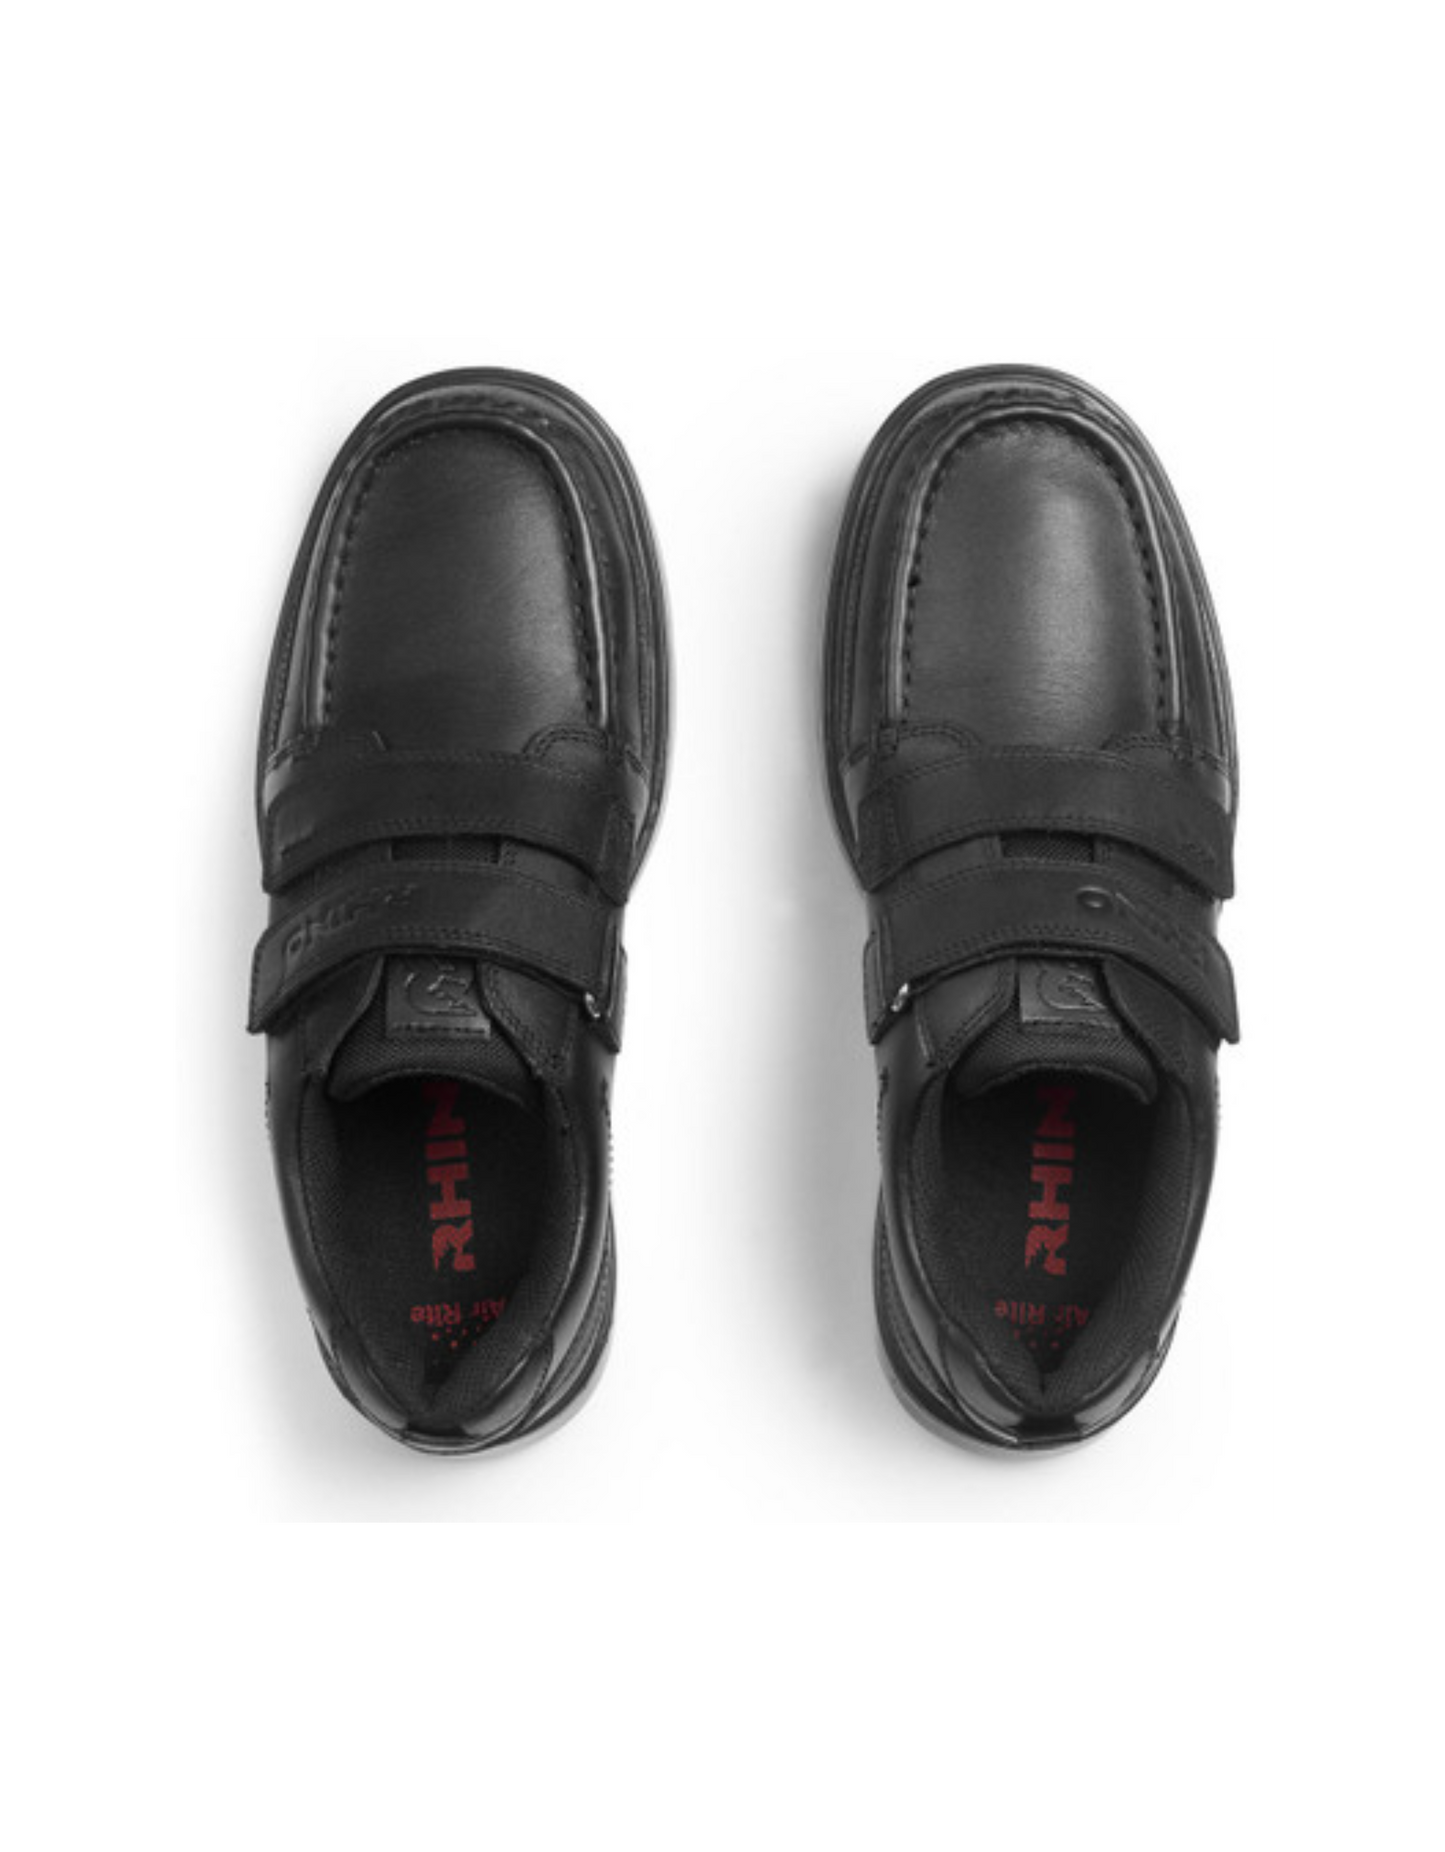 Startrite Mission Black leather boys riptape school shoes